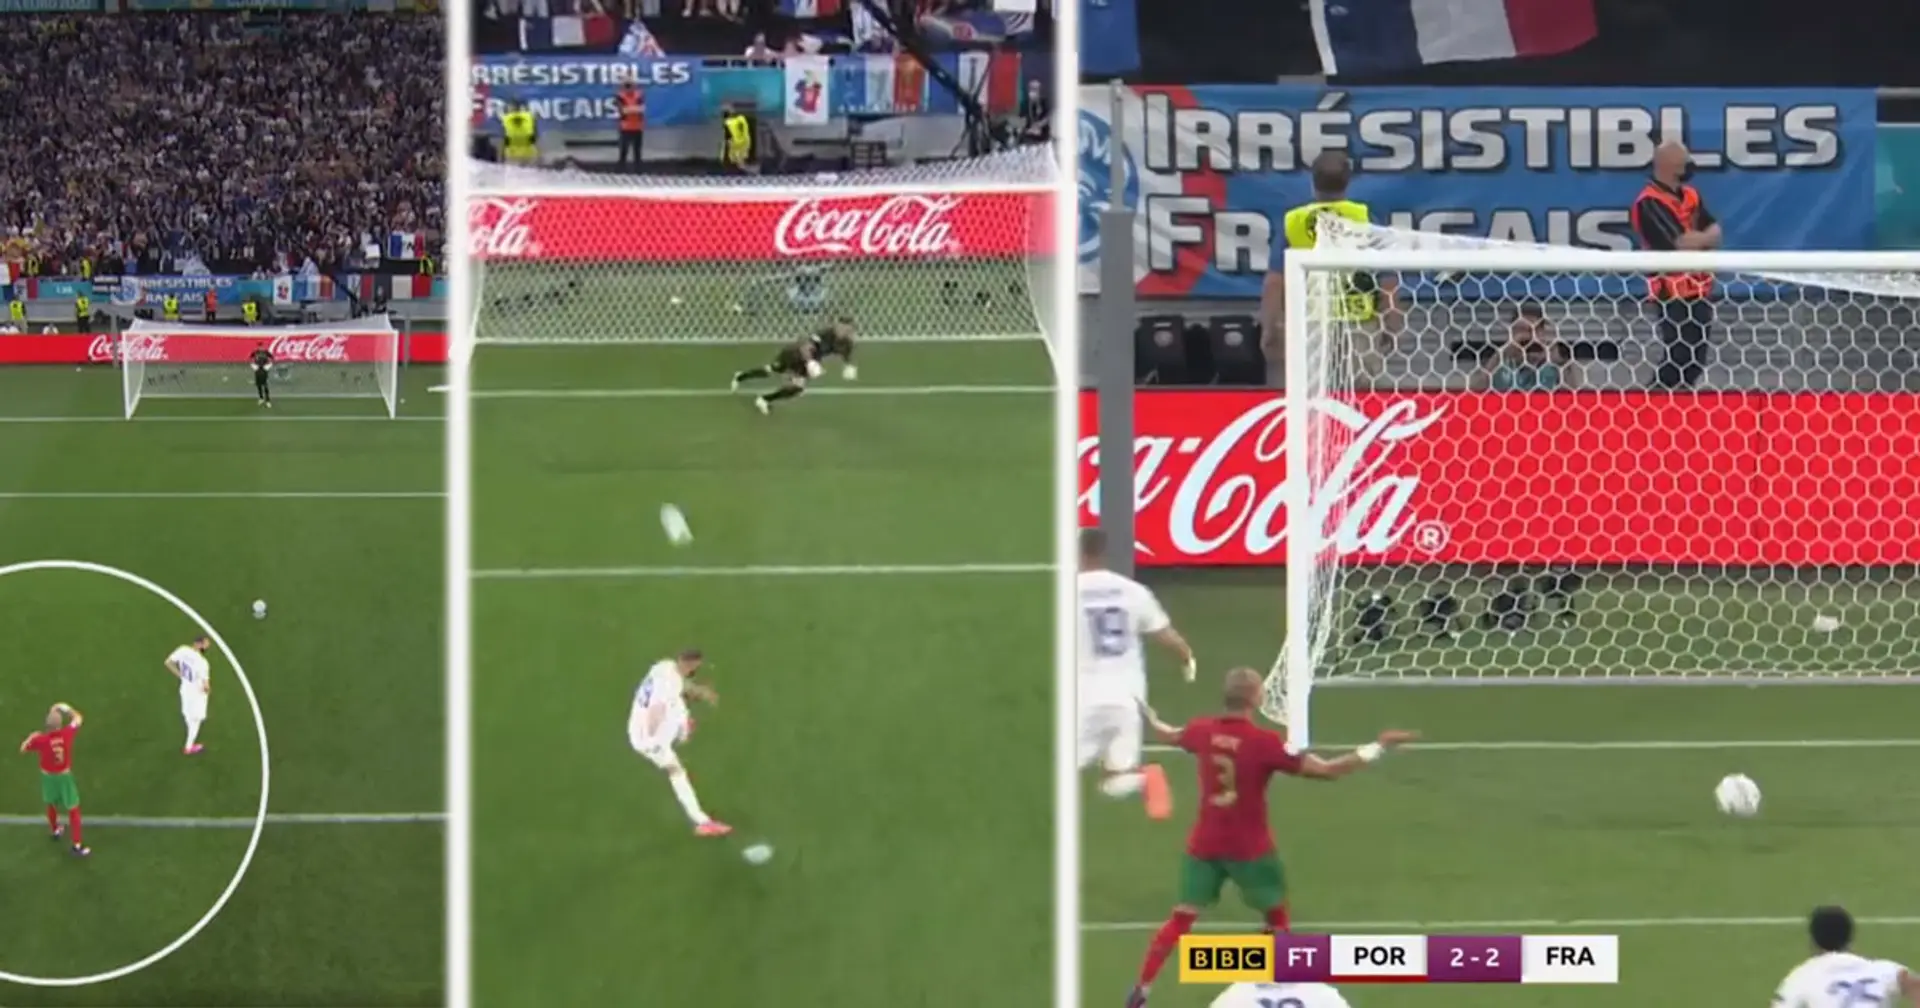 Cristiano Ronaldo caught on camera instructing Benzema where to pass the  ball during match - Football